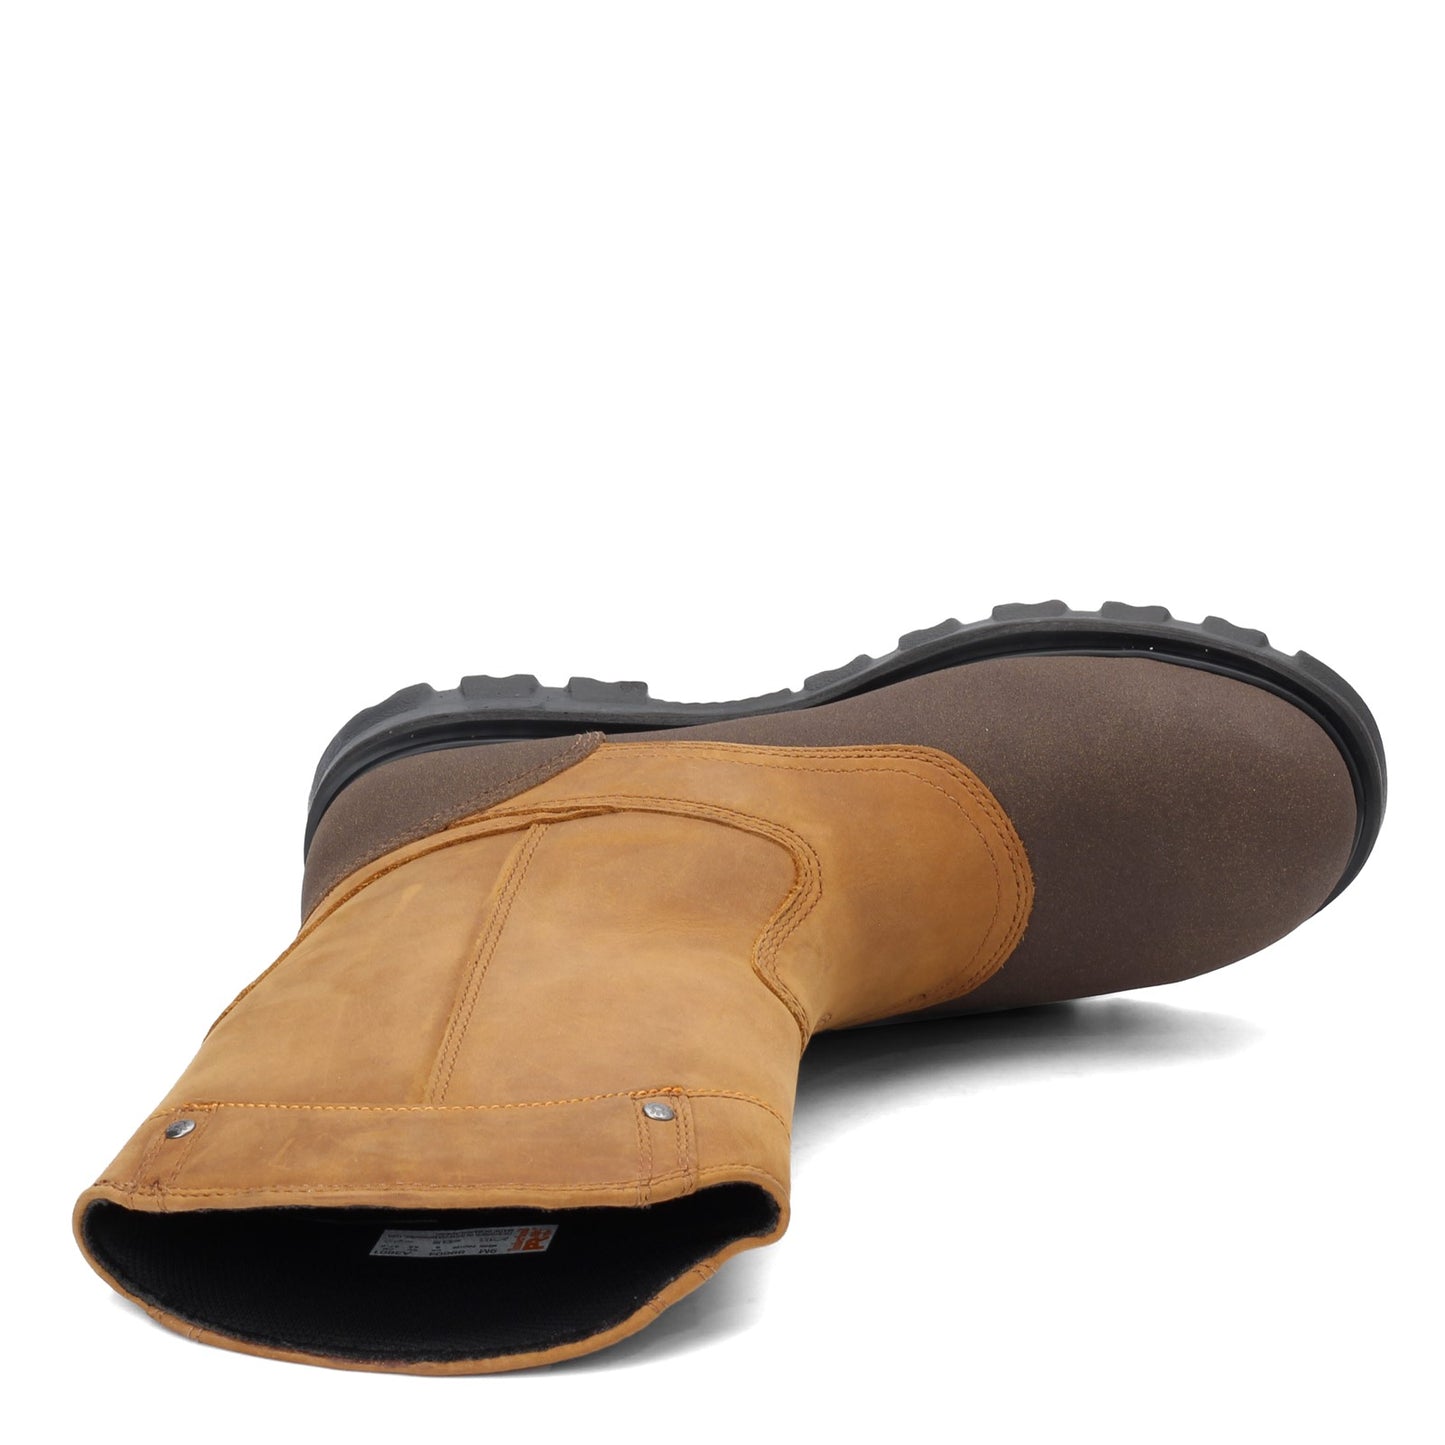 Peltz Shoes  Men's Timberland Rigmaster 9 Steel Toe Work Boot Brown TB089604270